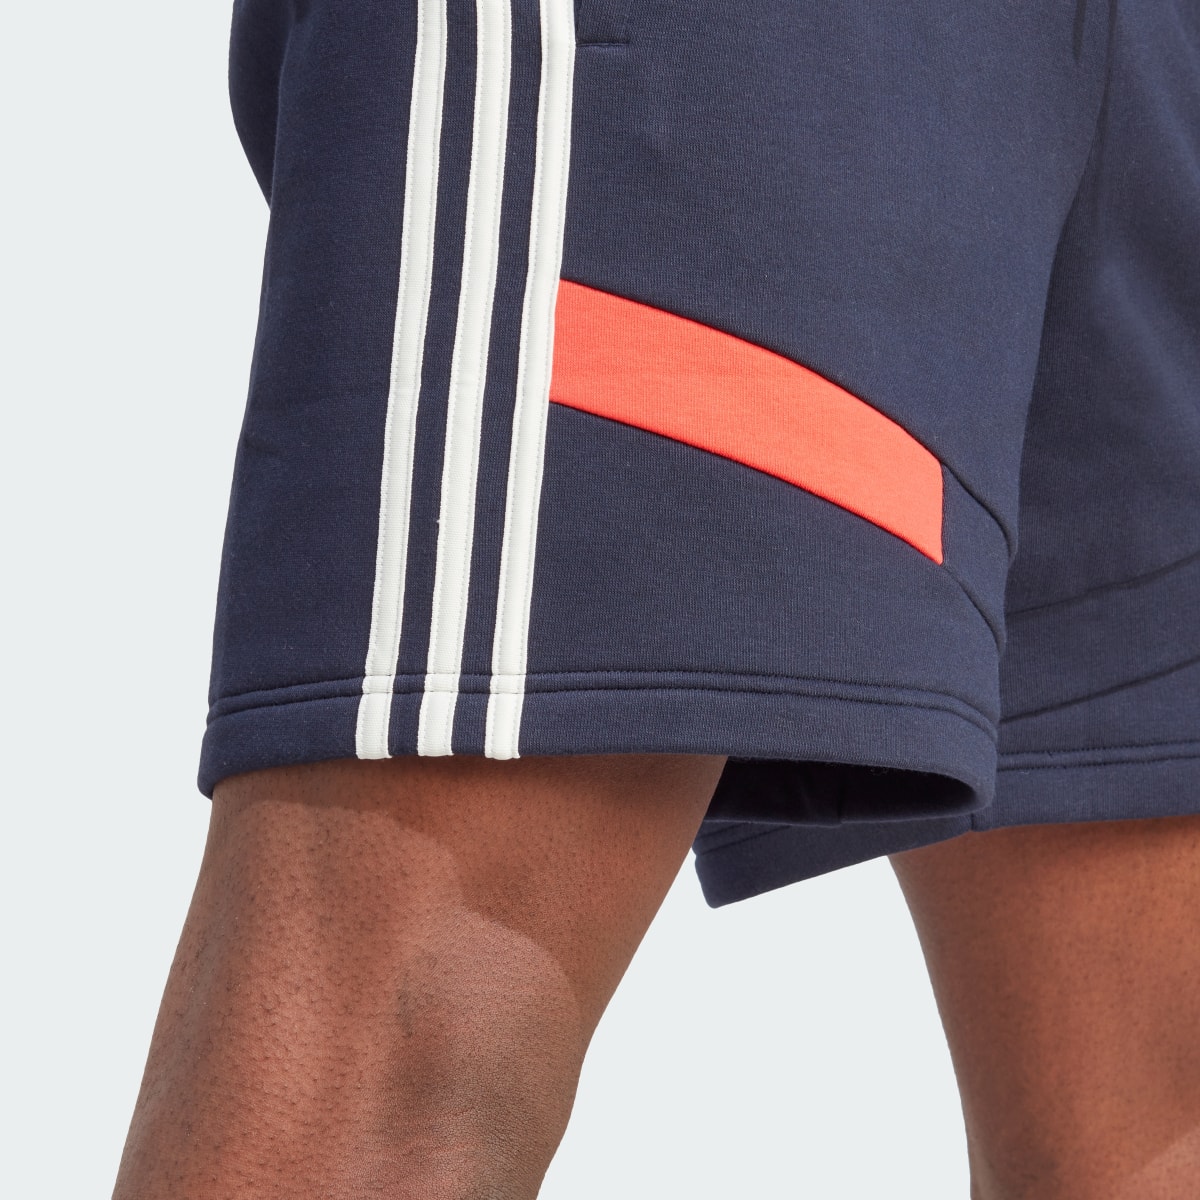 Adidas Colourblock Shorts. 6